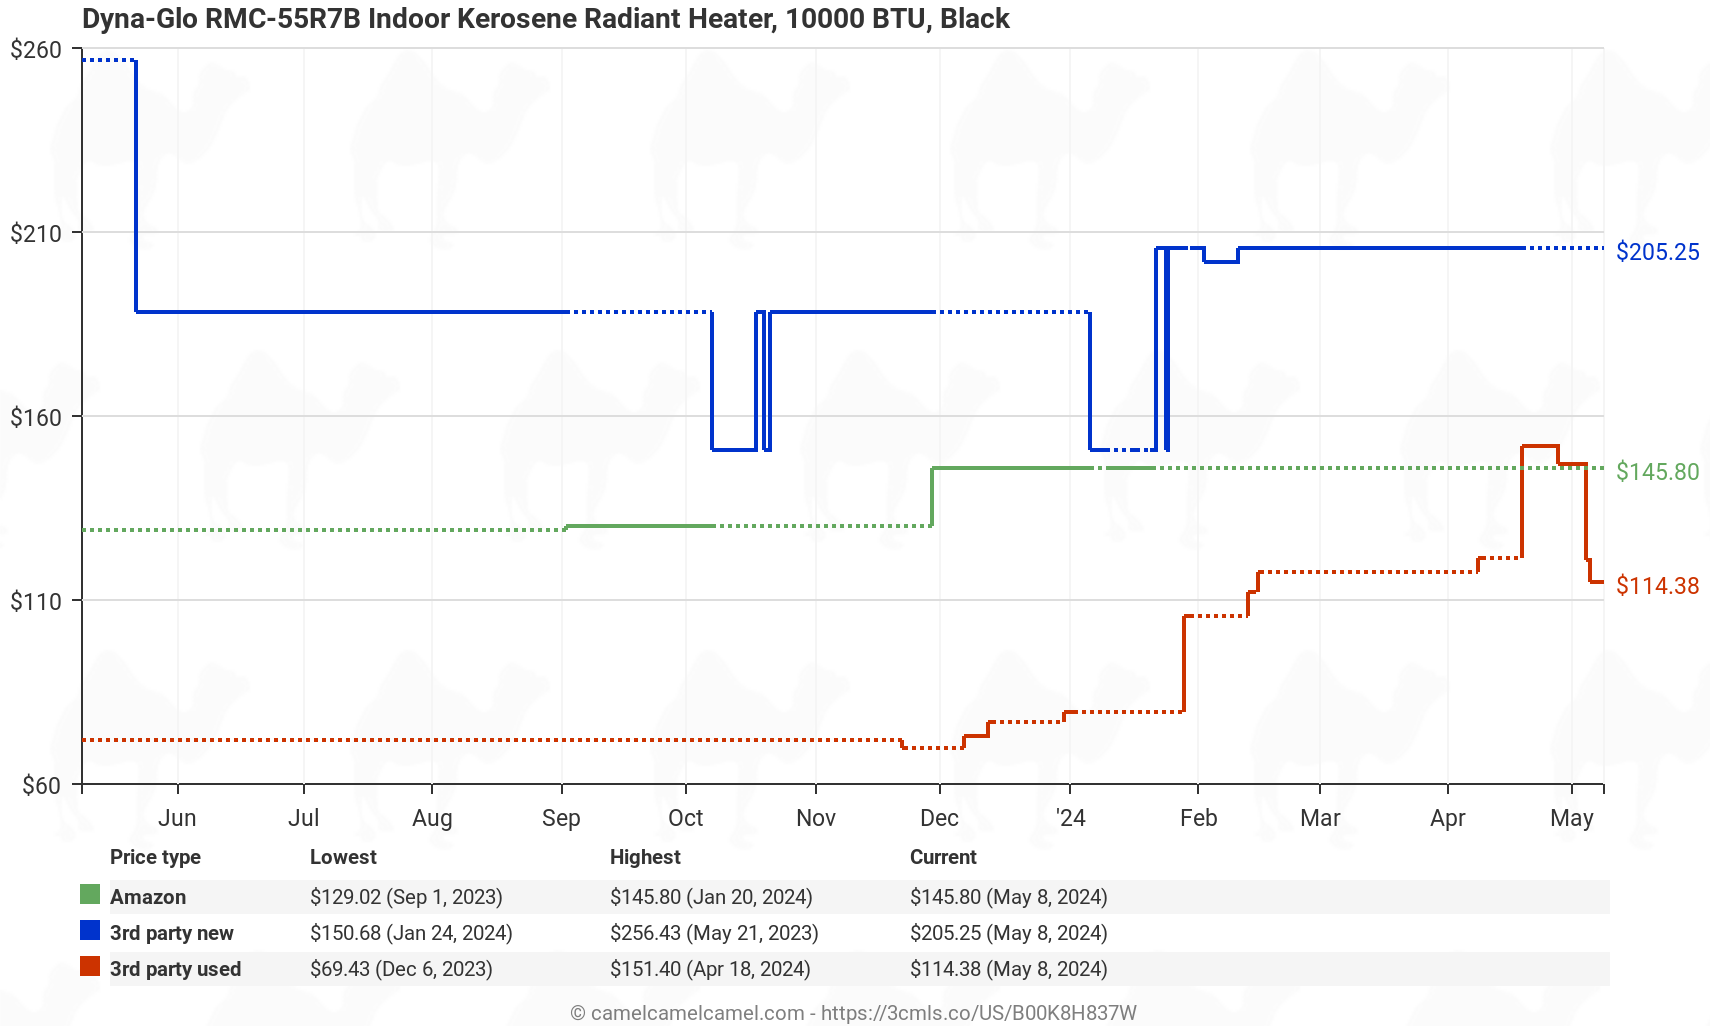 Dyna-Glo RMC-55R7B Indoor Kerosene Radiant Heater, 10000 BTU, Black - Price History: B00K8H837W